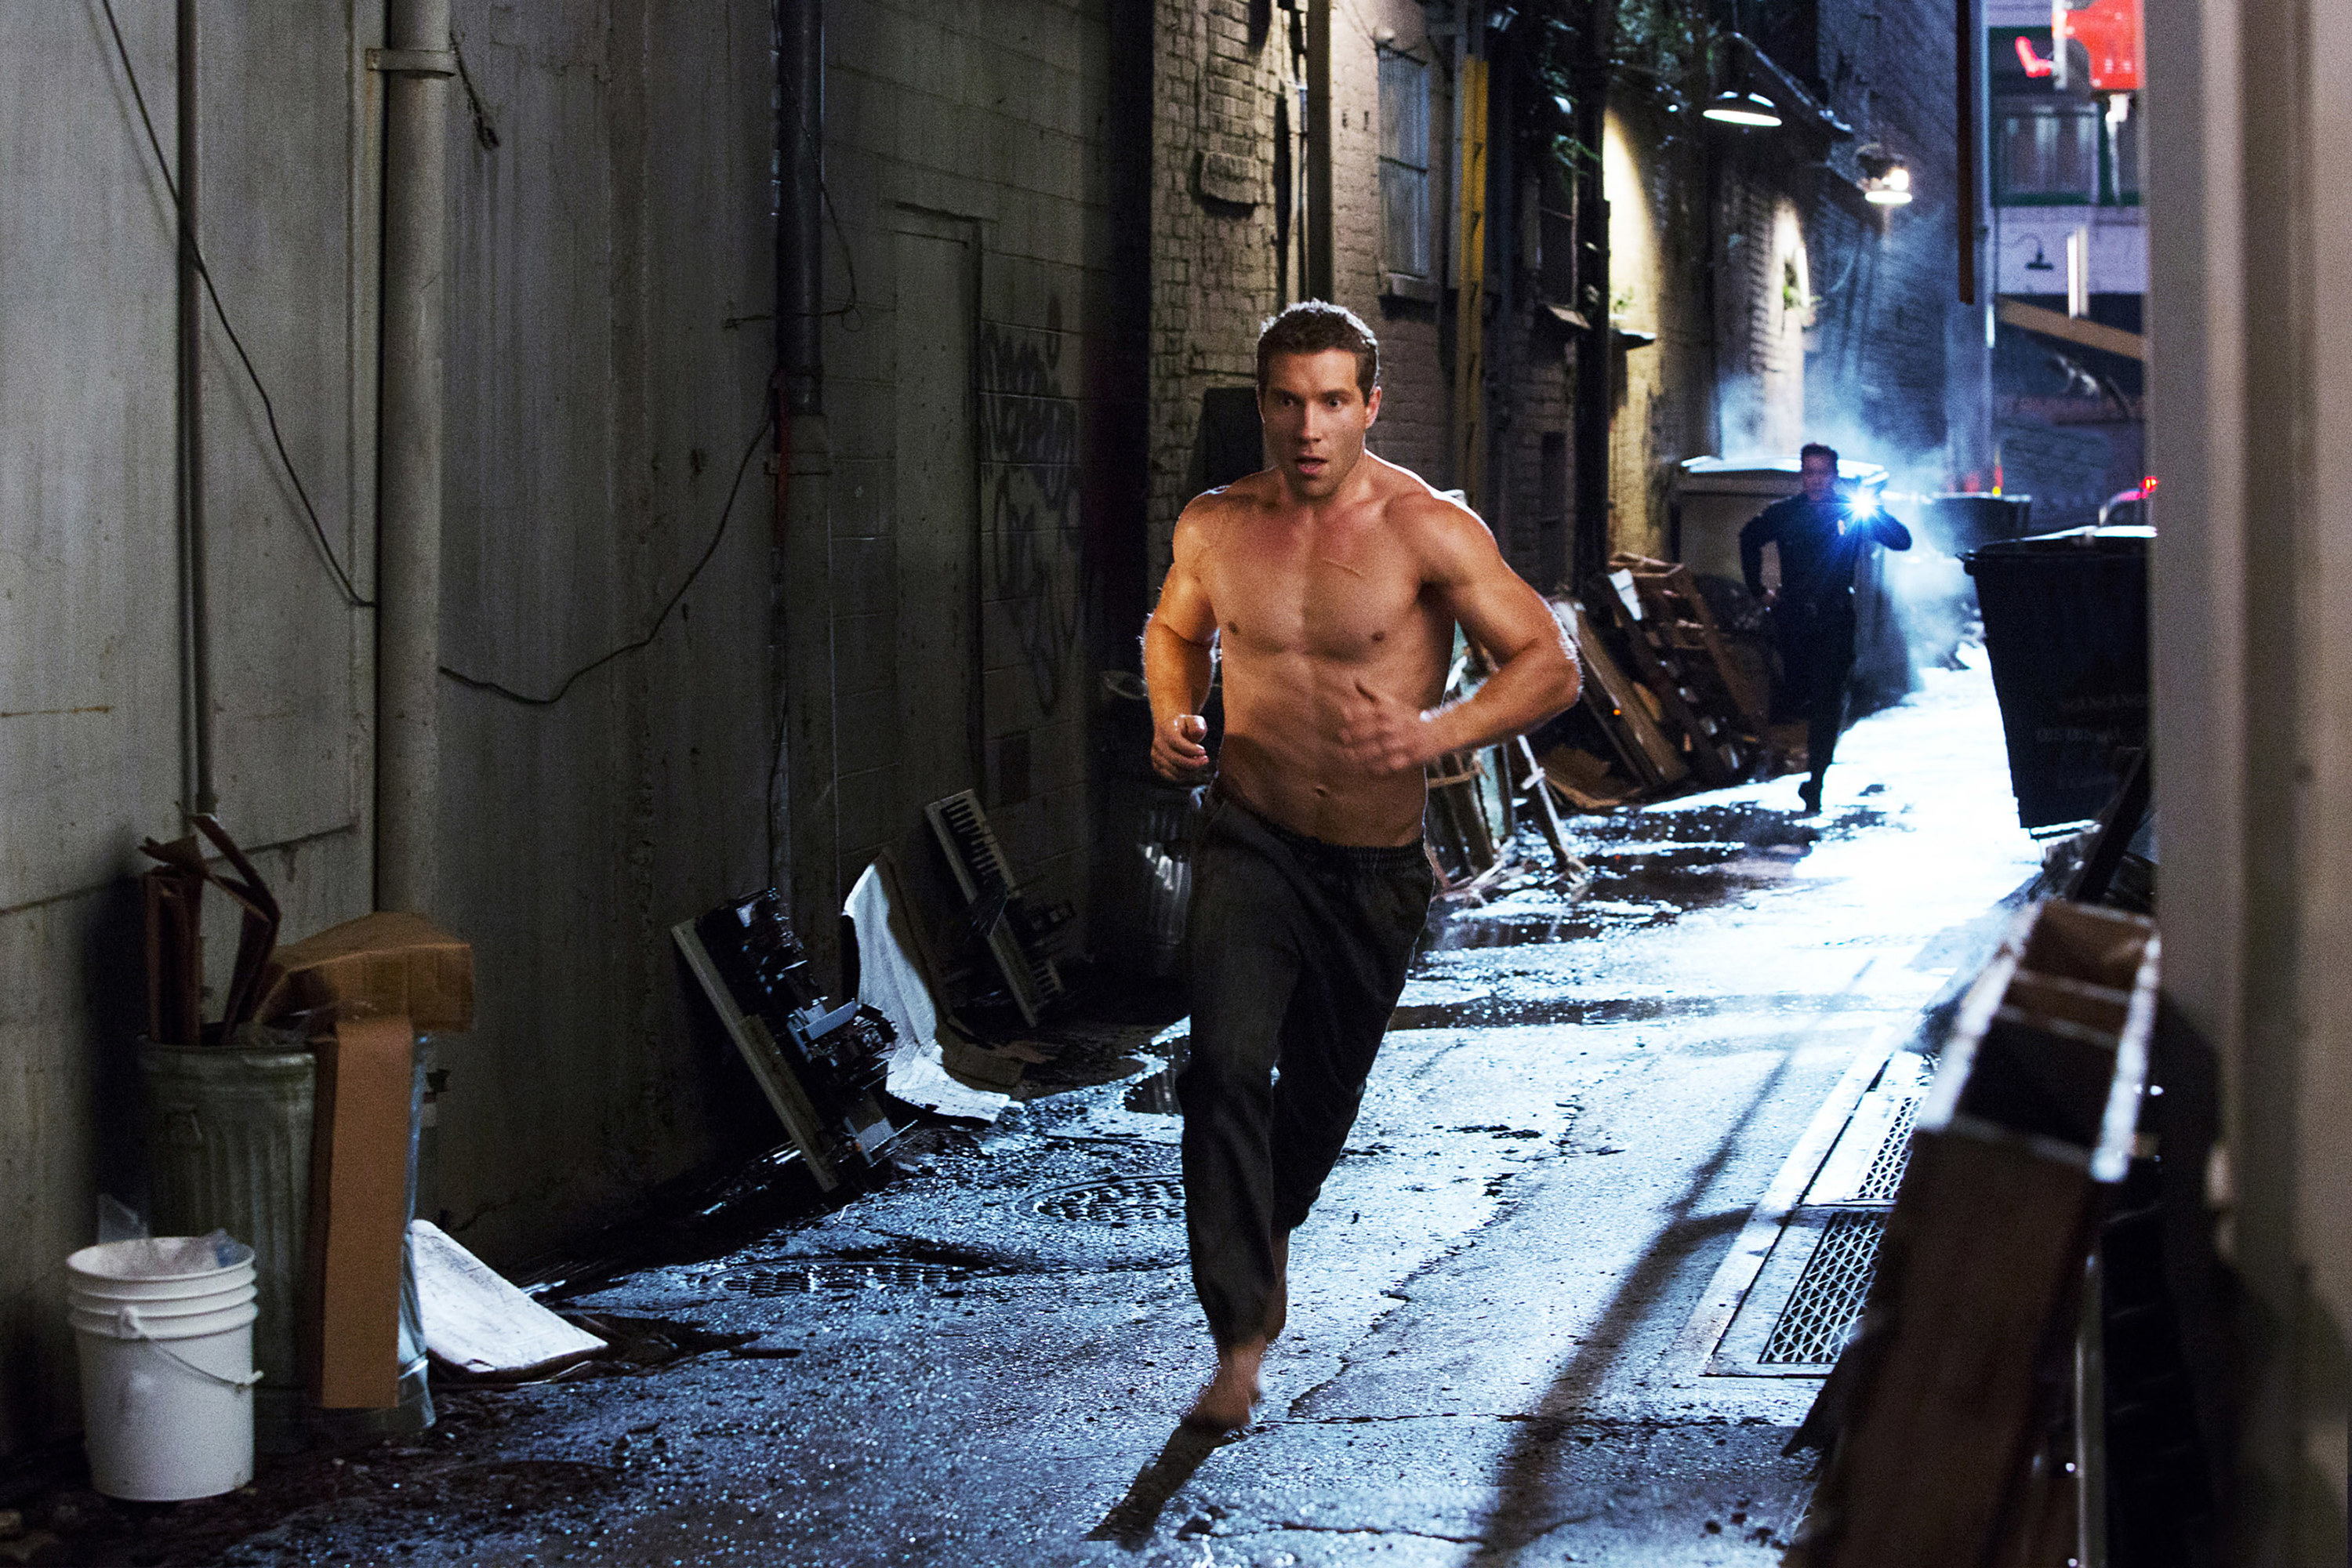 A shirtless man running down an alleyway